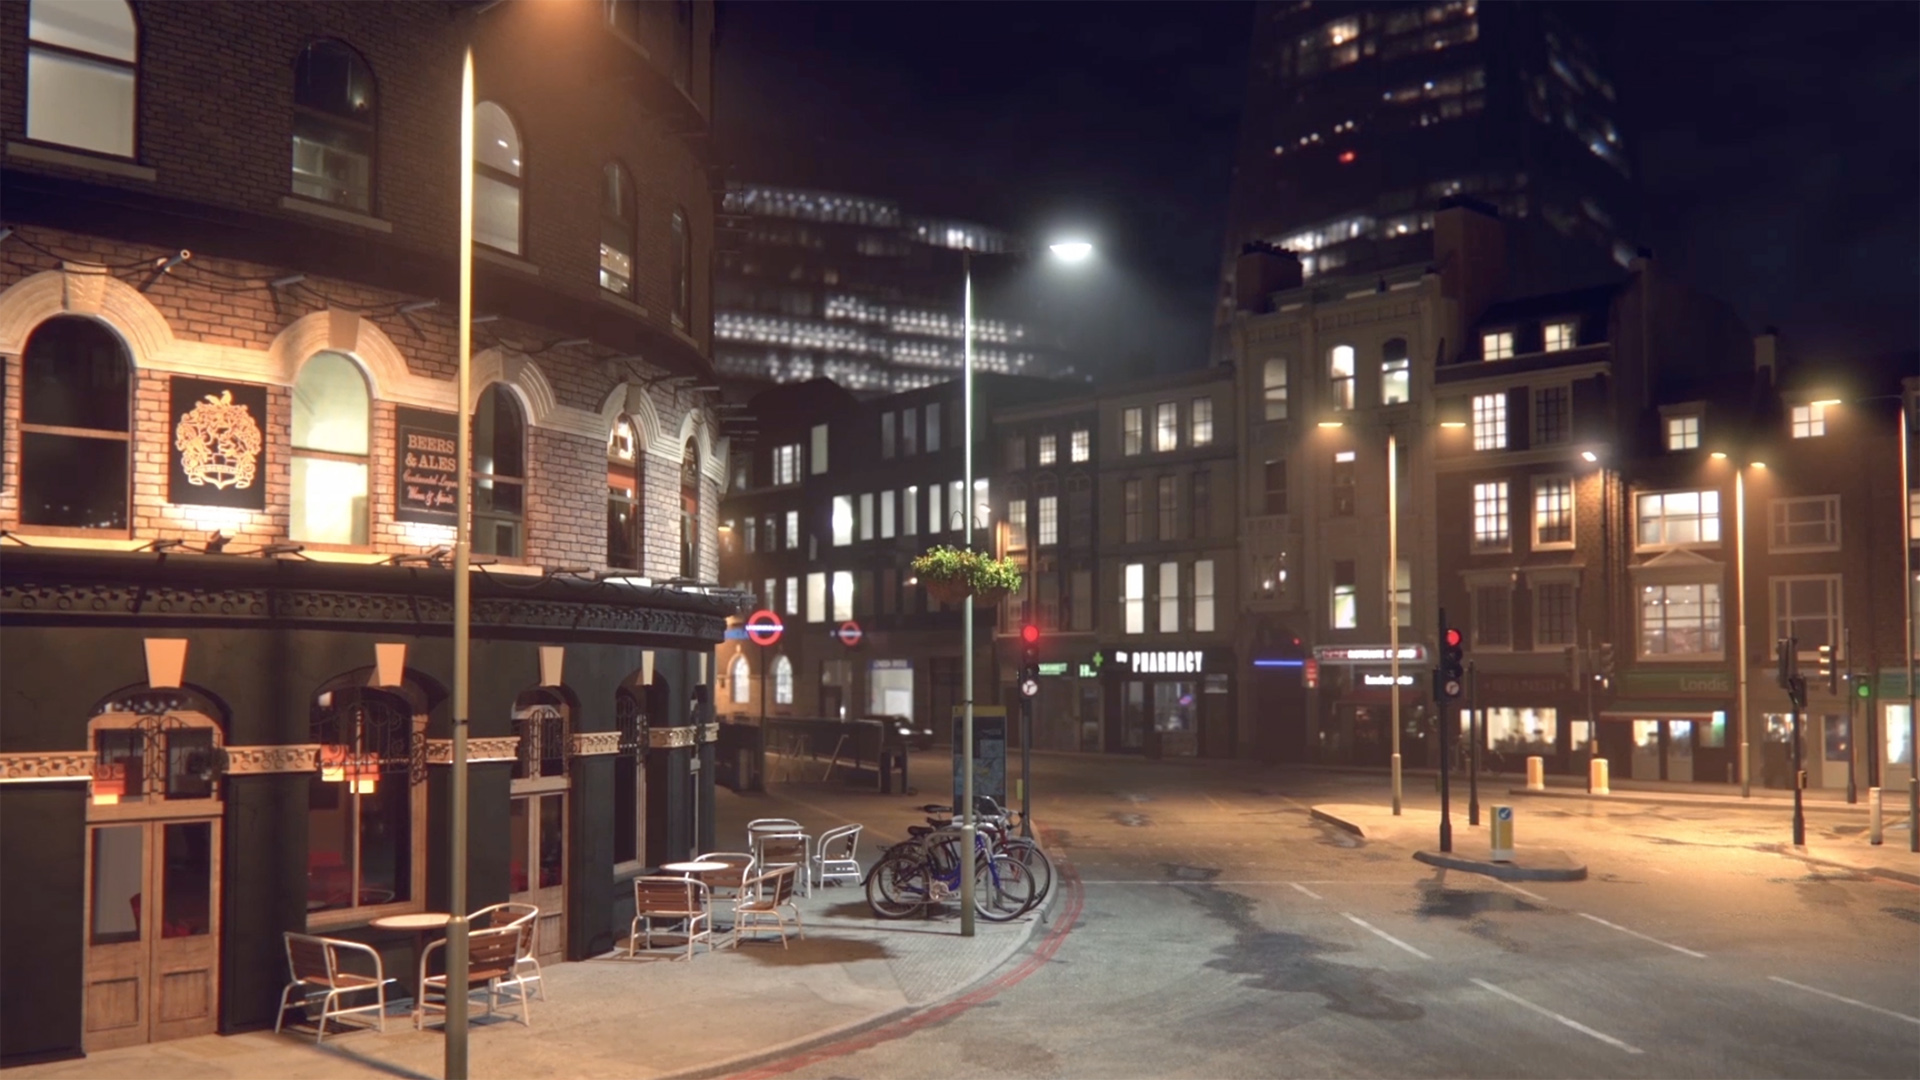 360 virtual animations showing cgi city scene at night